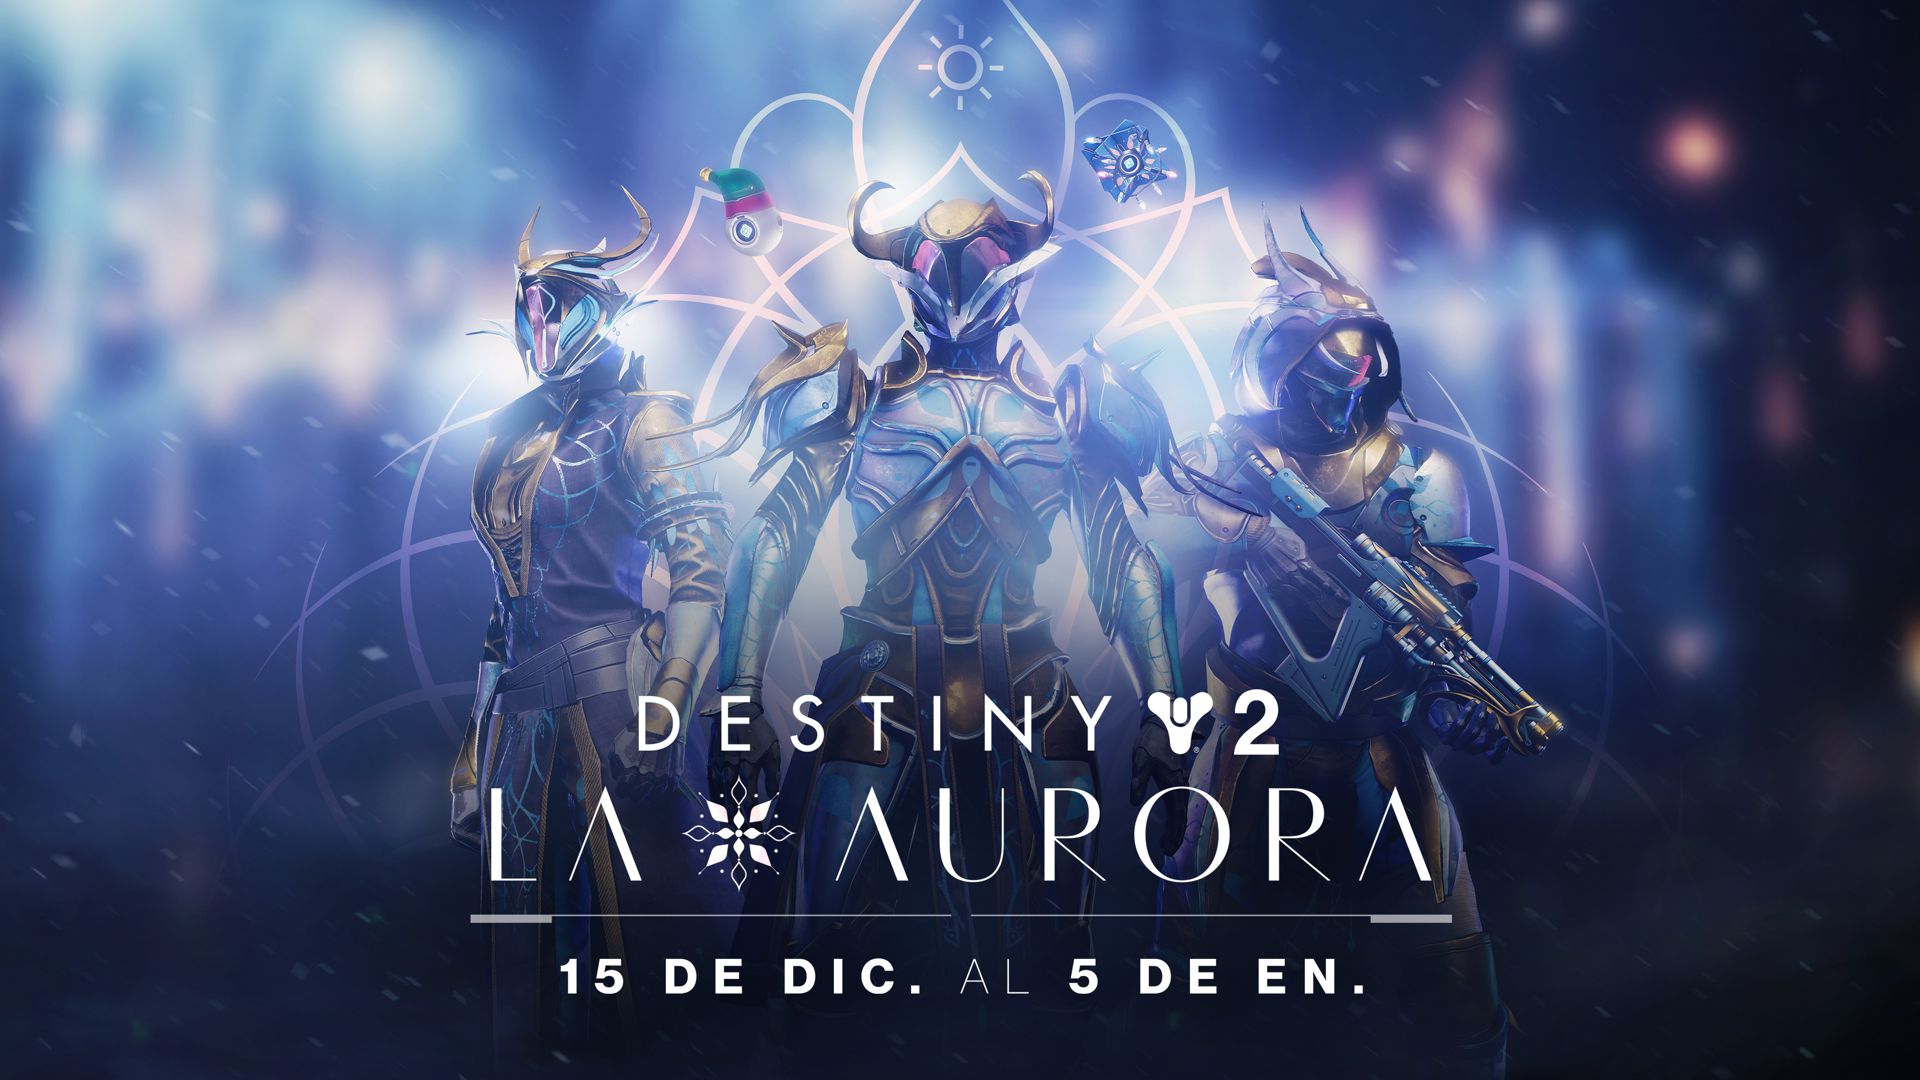 Destiny 2 La Aurora